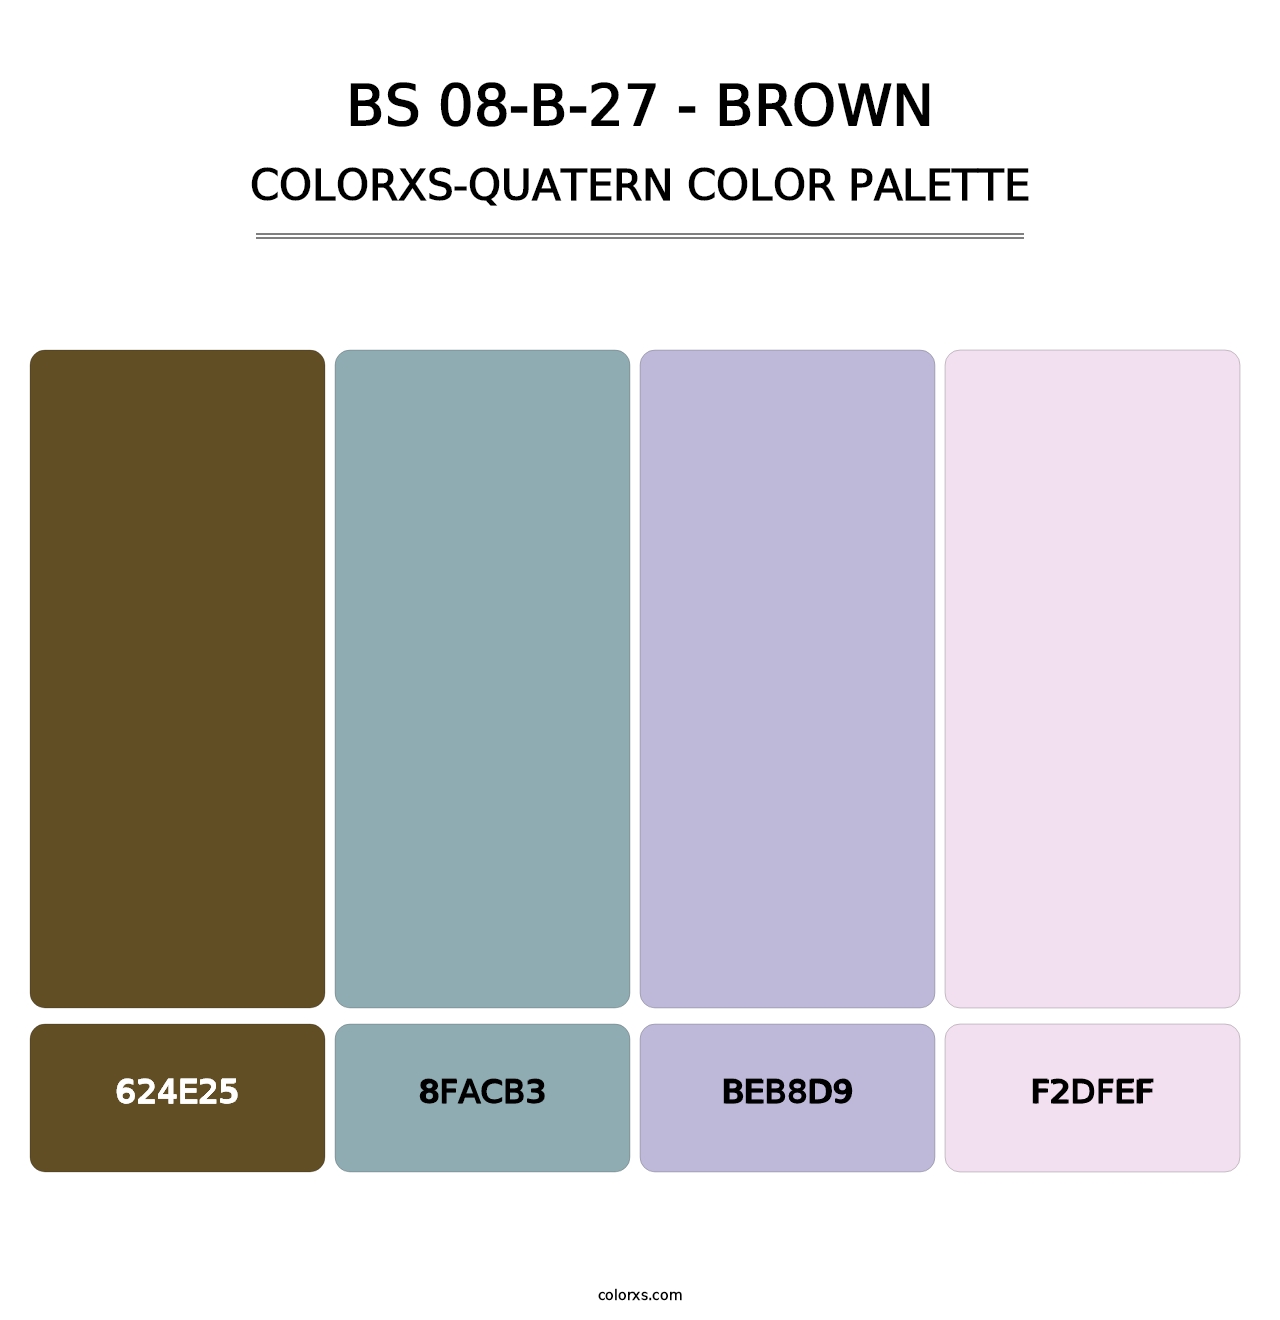 BS 08-B-27 - Brown - Colorxs Quatern Palette